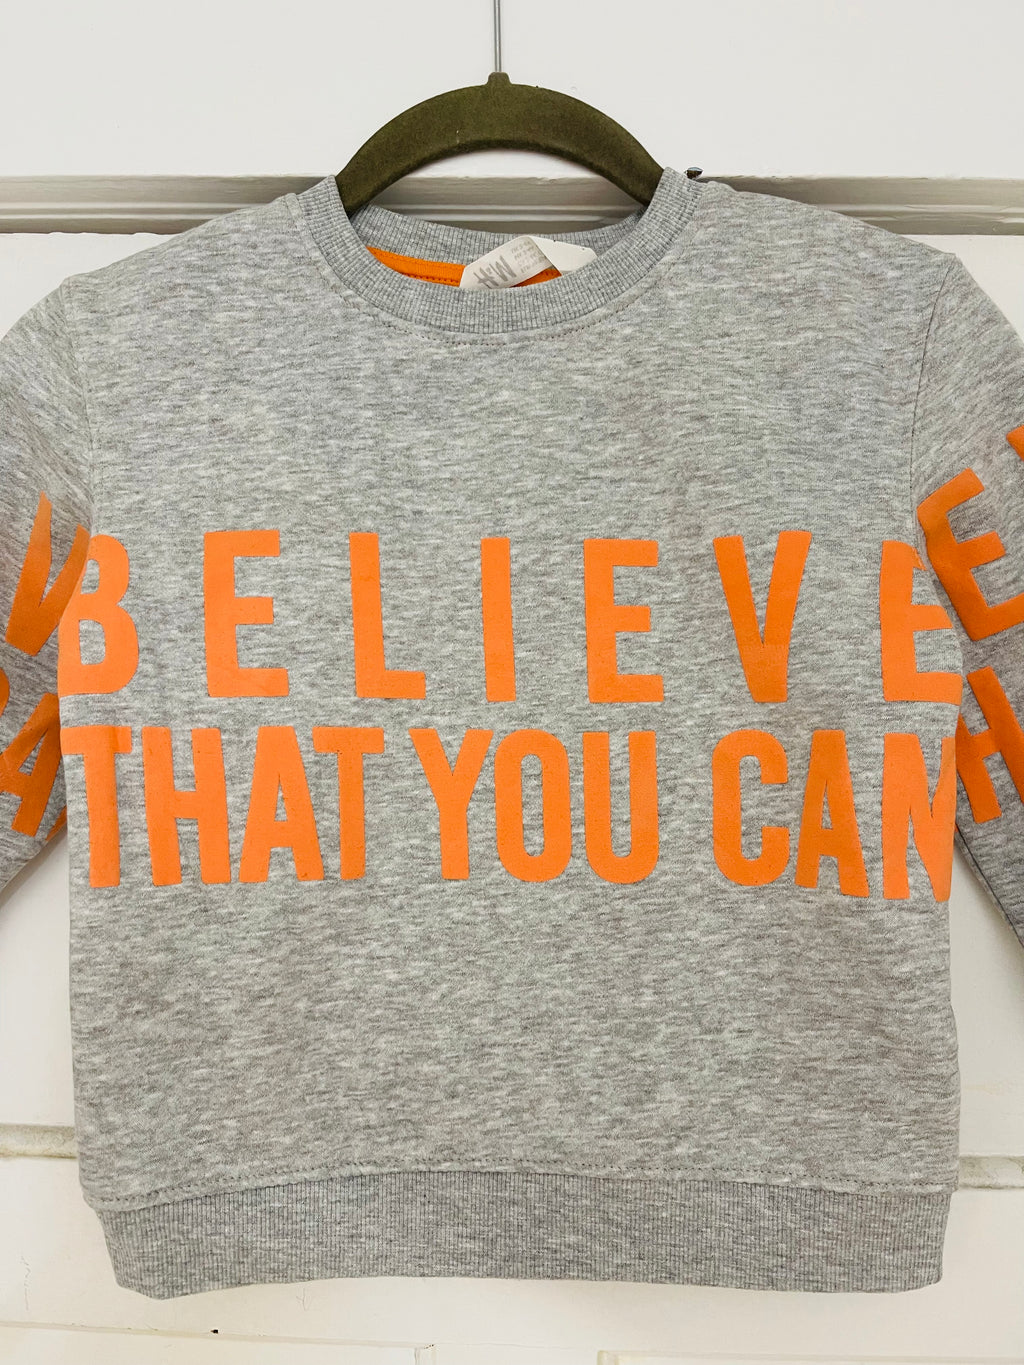 KIDS H&M Grey Believe That You Can Sweatshirt Kids Sz 2-4yrs NEW!